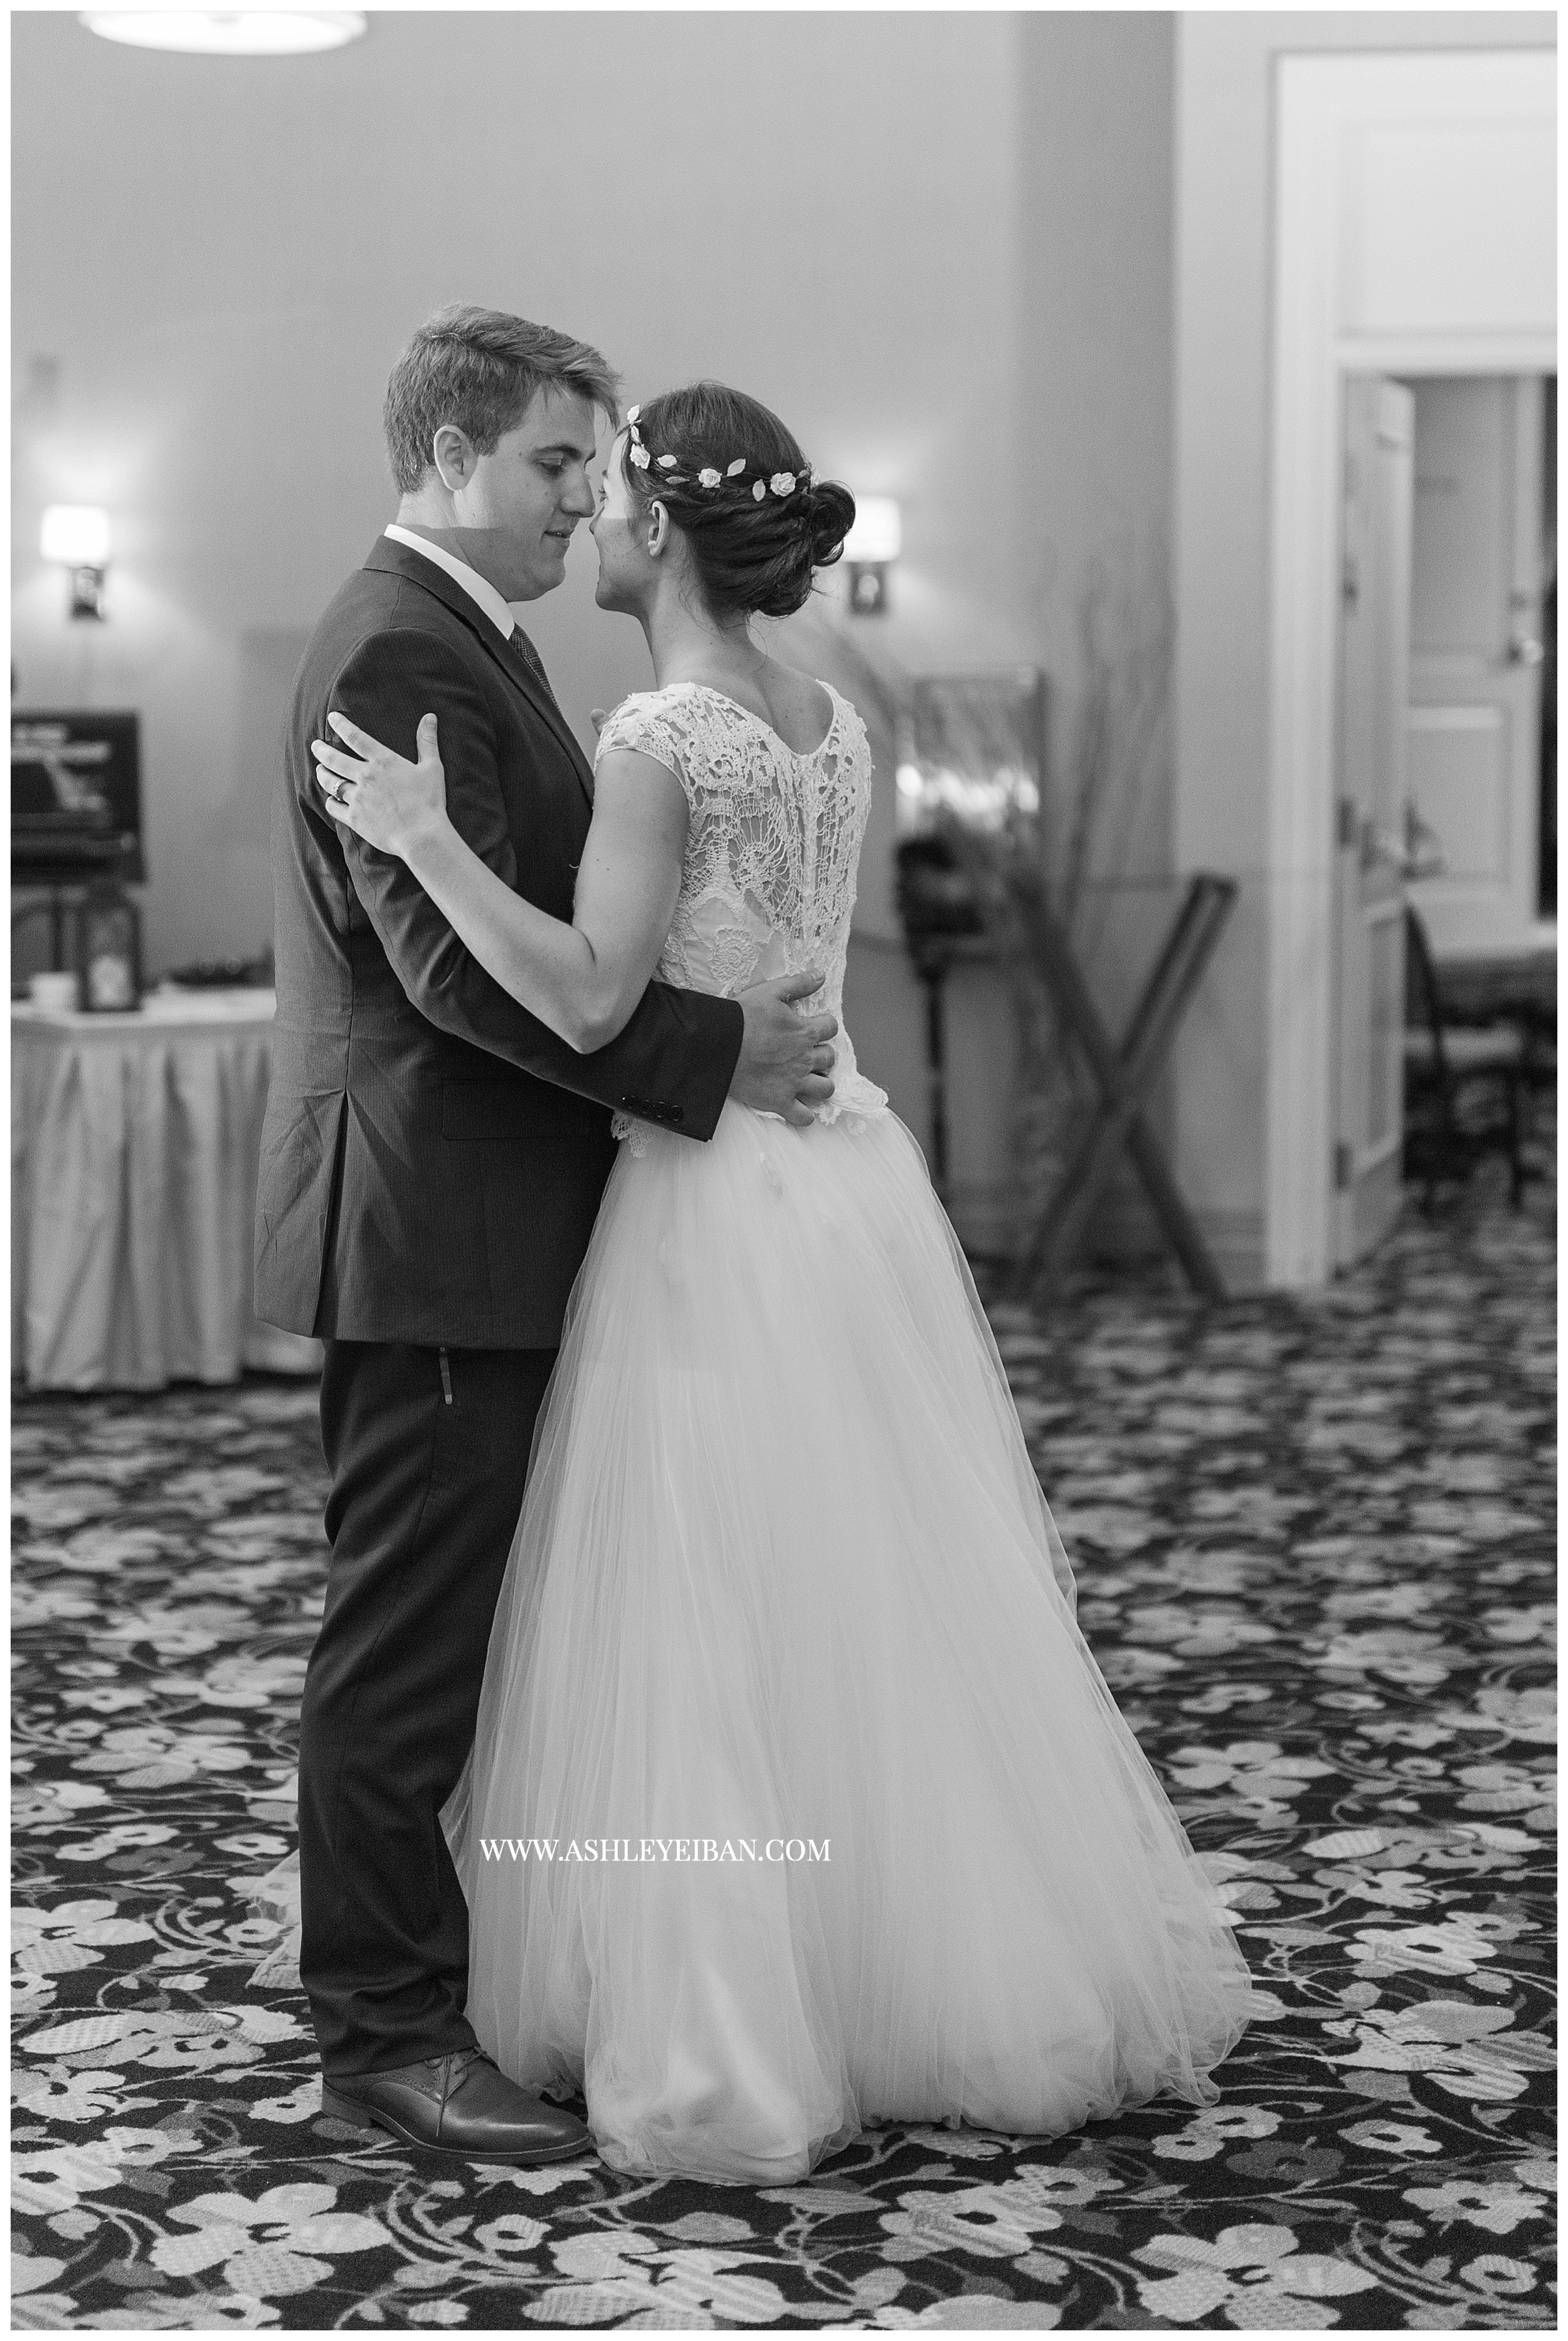 Lynchburg Wedding Photographer || Backyard Virginia Wedding || Craddock Terry Wedding || Ashley Eiban Photography || www.ashleyeiban.com